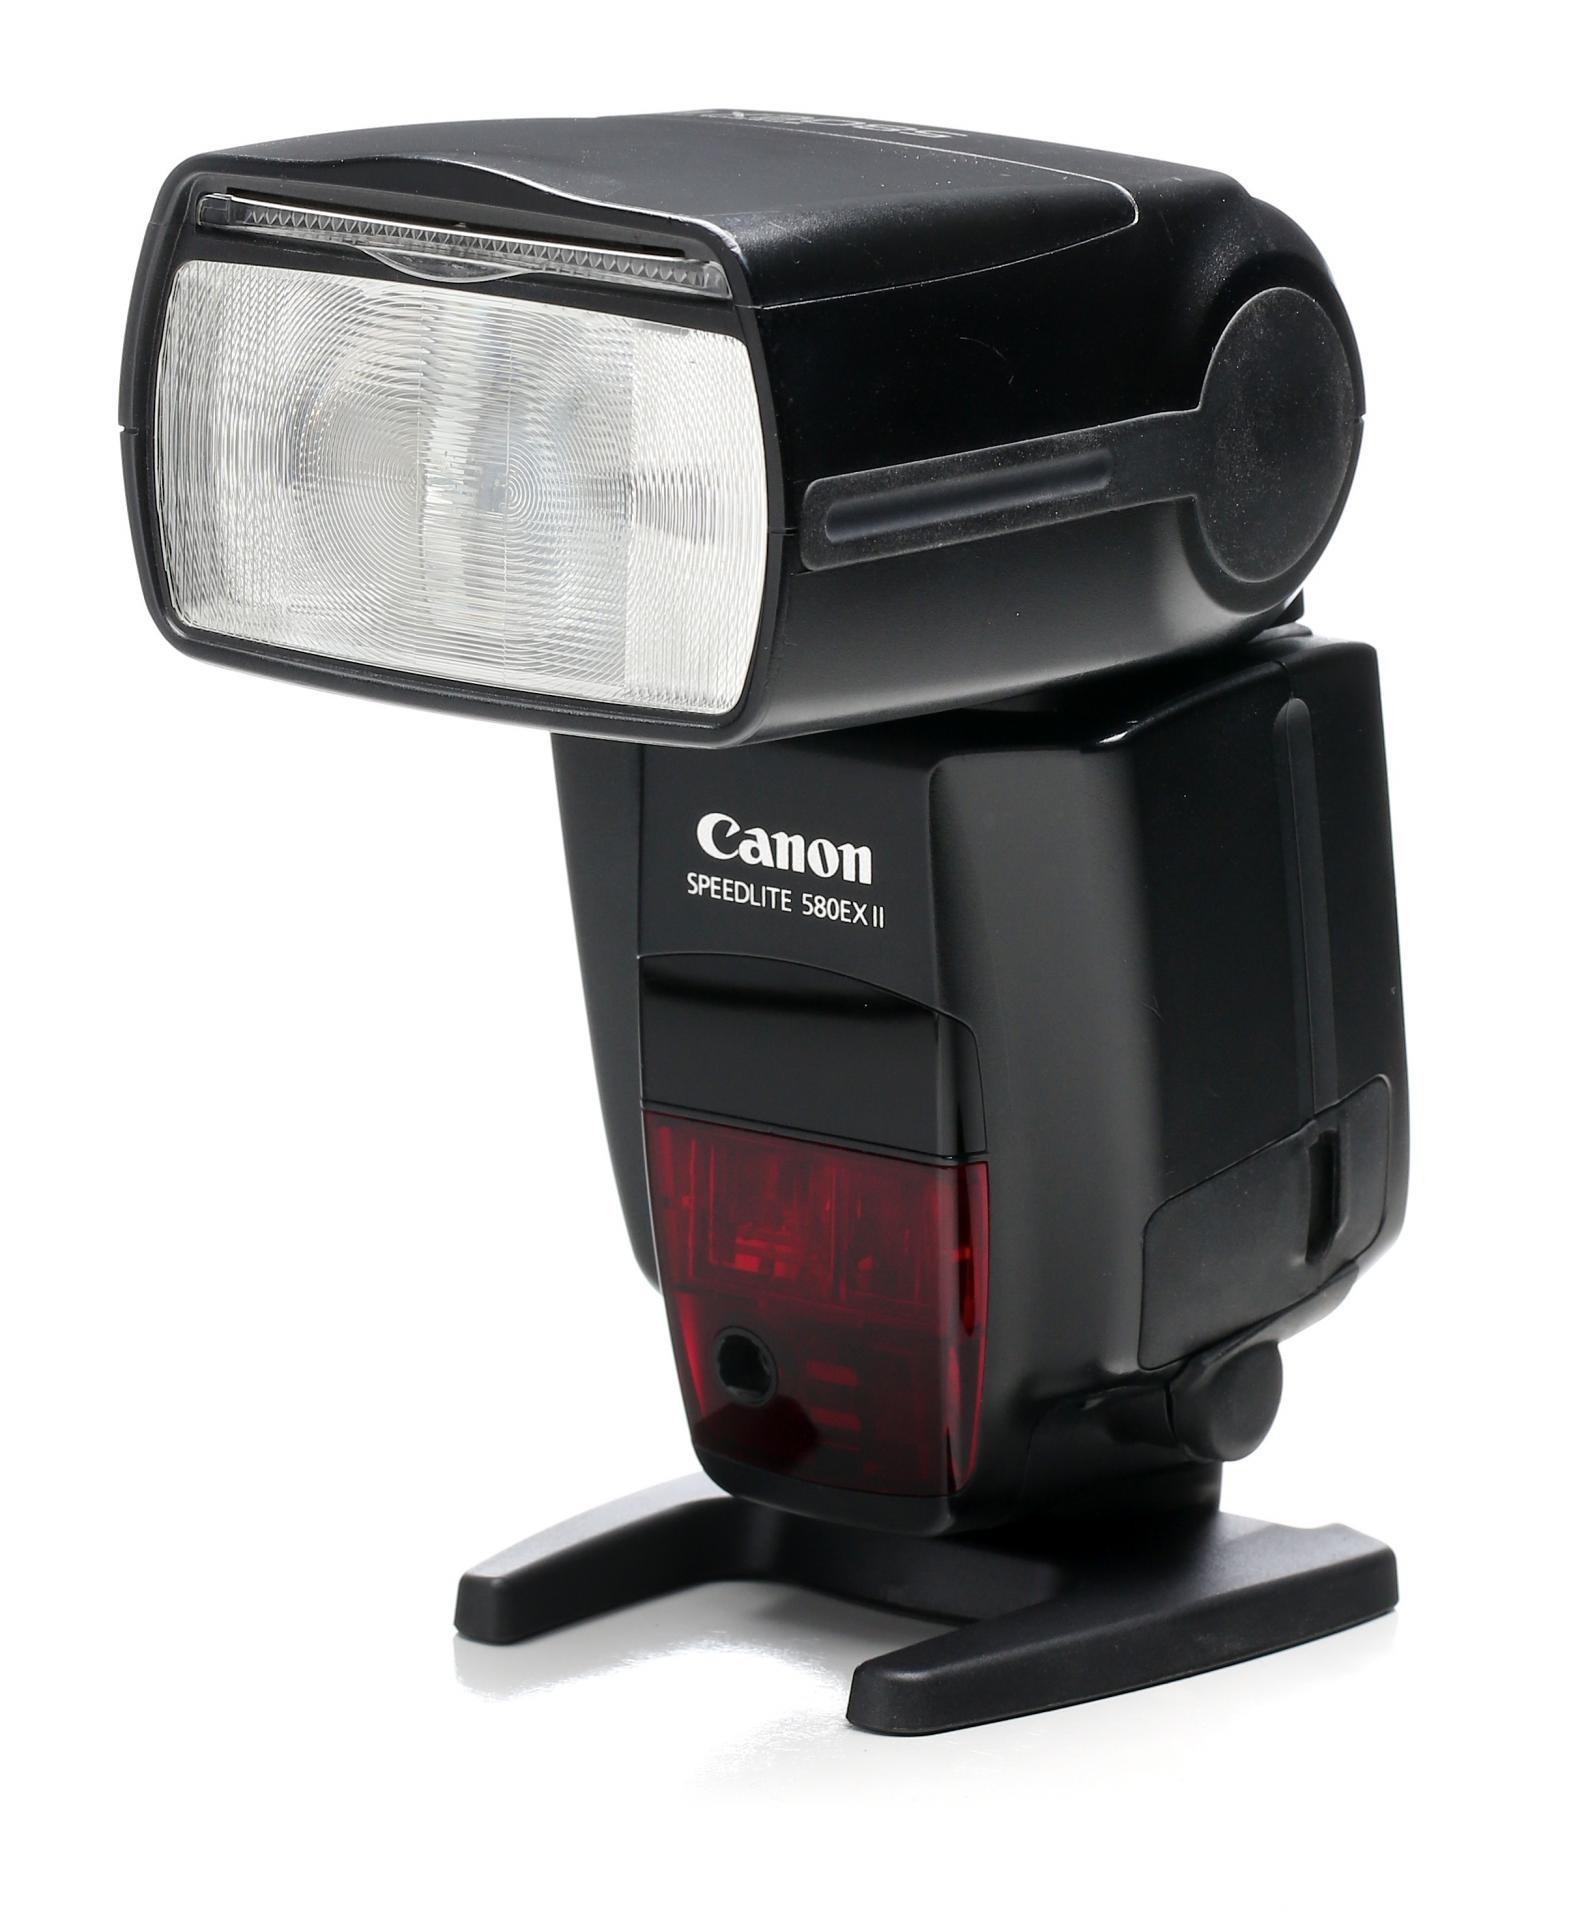 Canon 580ex ii speedlite flash